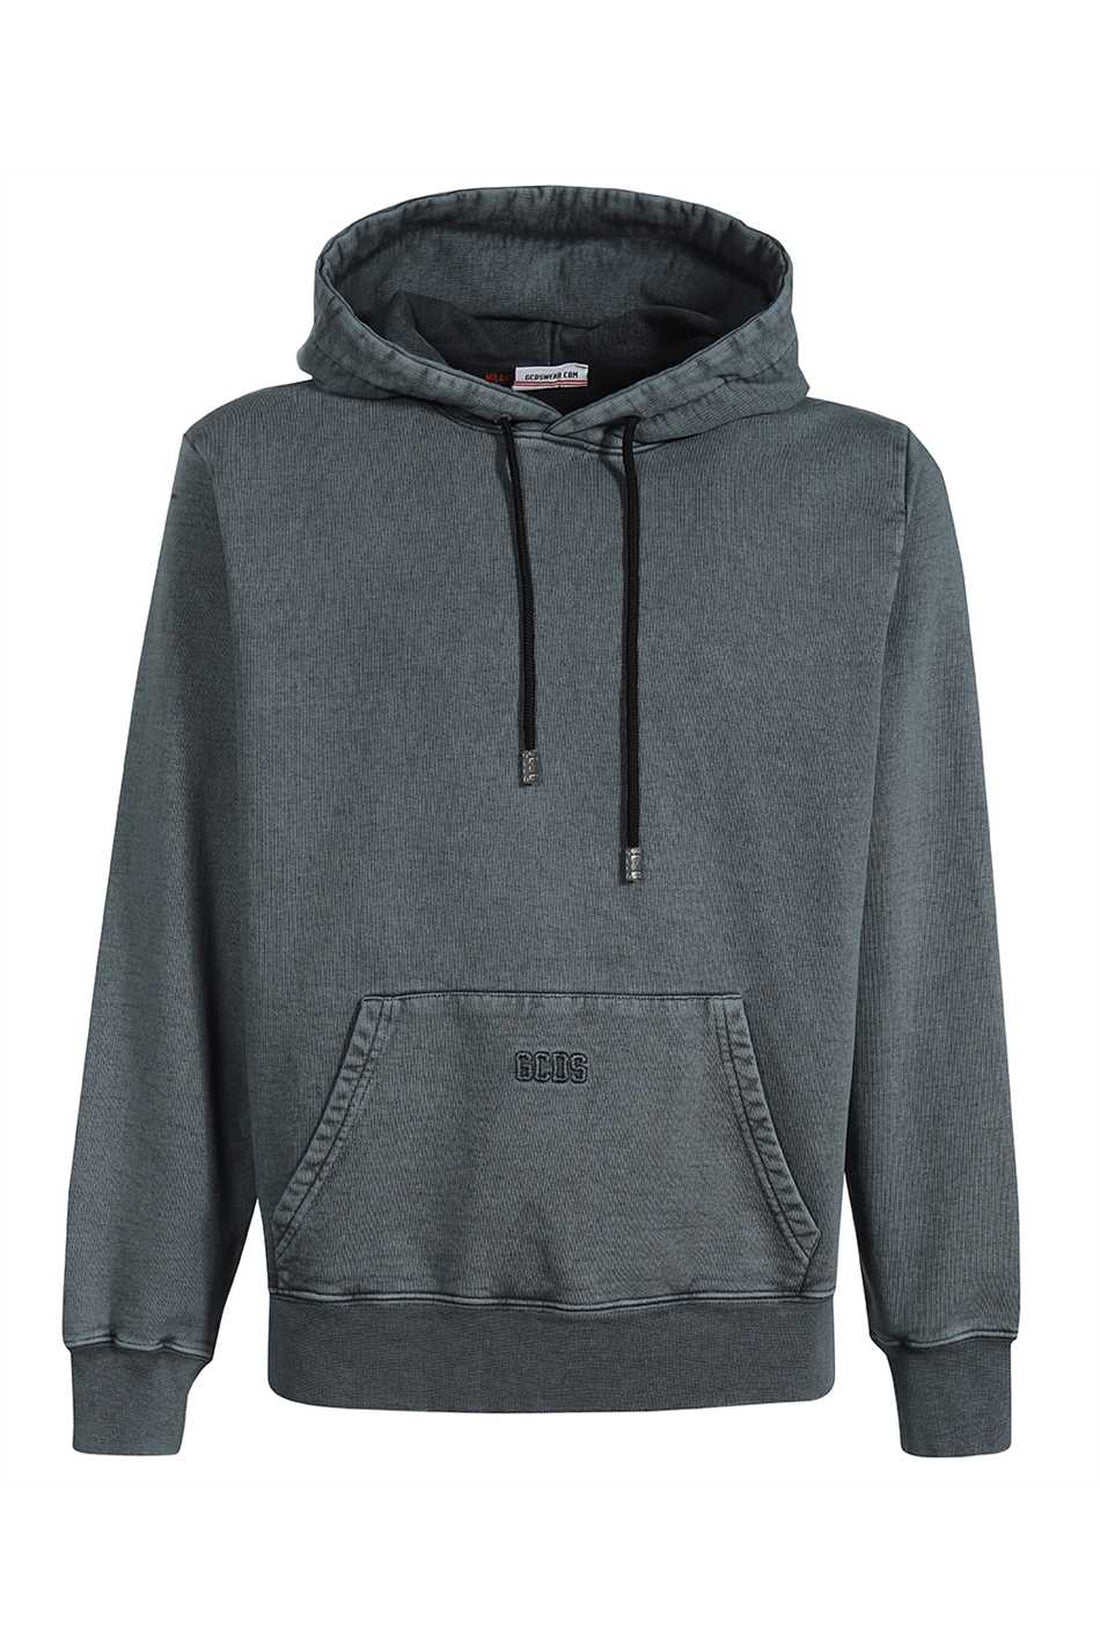 GCDS-OUTLET-SALE-Hooded sweatshirt-ARCHIVIST